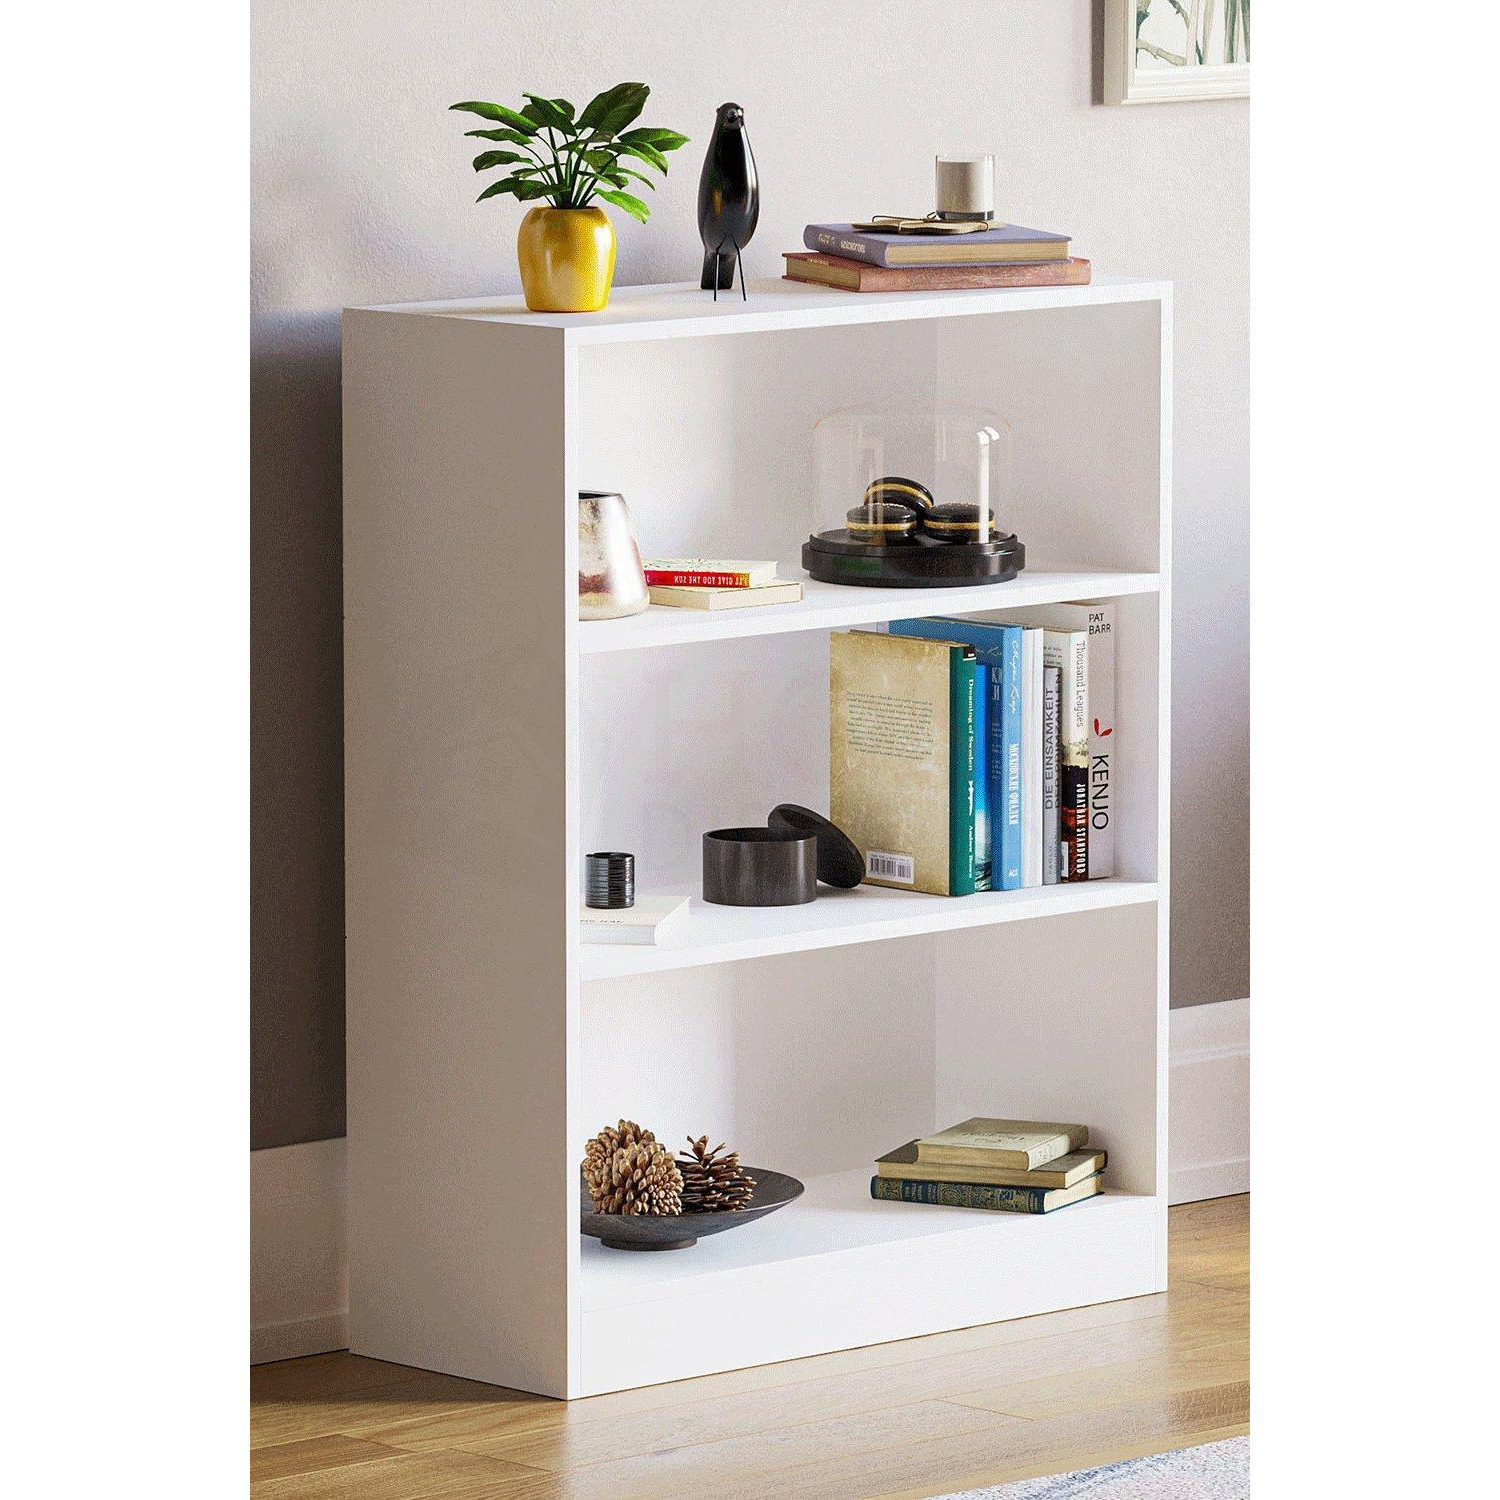 Vida Designs Cambridge 3 Tier Low Bookcase Storage Unit 750 x 600 x 240 mm - image 1